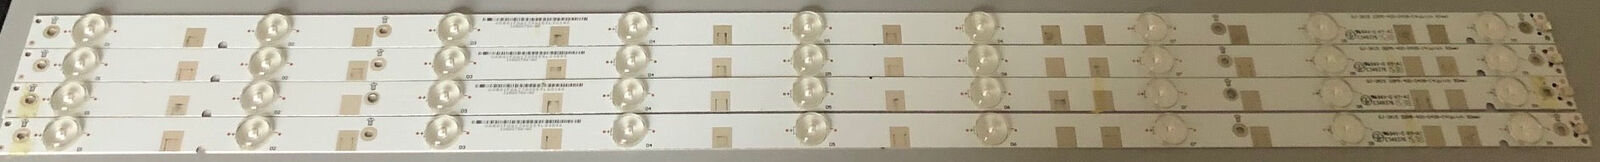 GJ-2K15 D2P5-400-D409-C4 LEDS FOR PHILIPS 40PFT4200/12